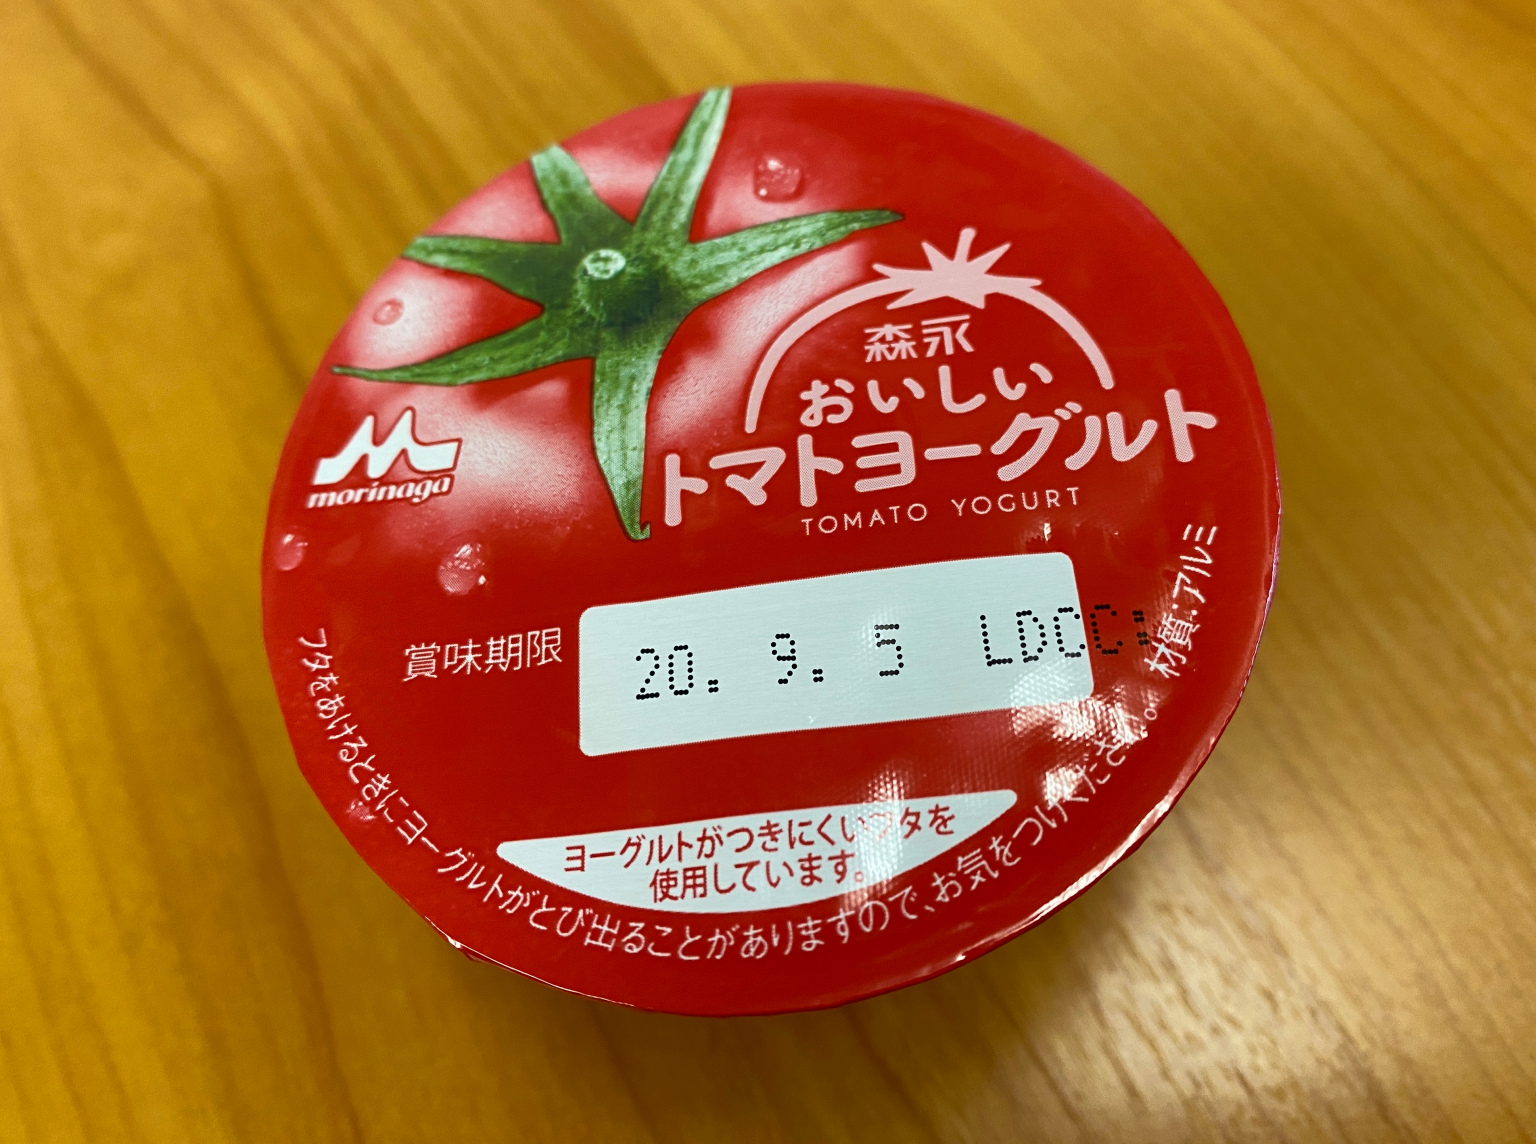 Tomato-Yoghurt-Japan-taste-test-buy-shop-review-Japanese-yogurt-news-3.jpg